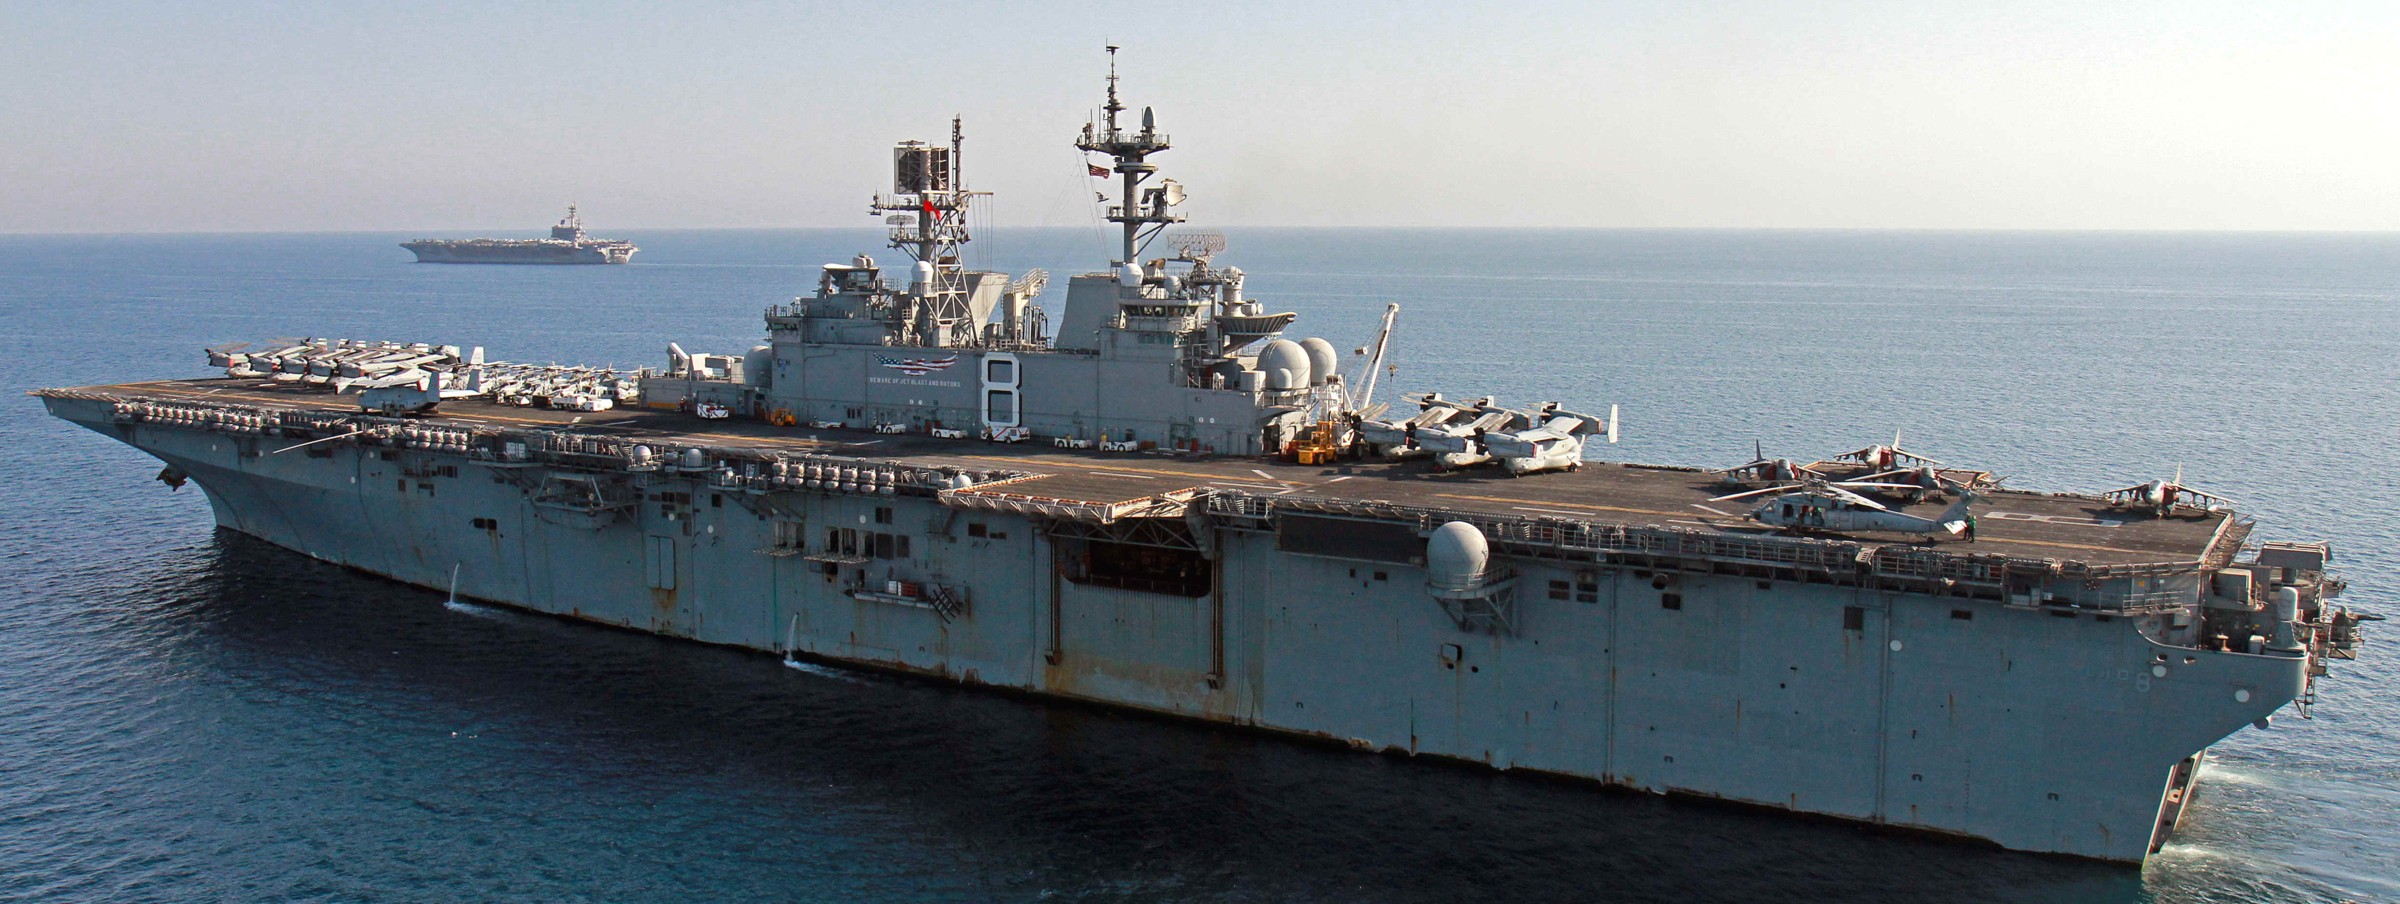 lhd-8 uss makin island amphibious assault ship landing helicopter dock us navy vmm-163 marines persian gulf 73